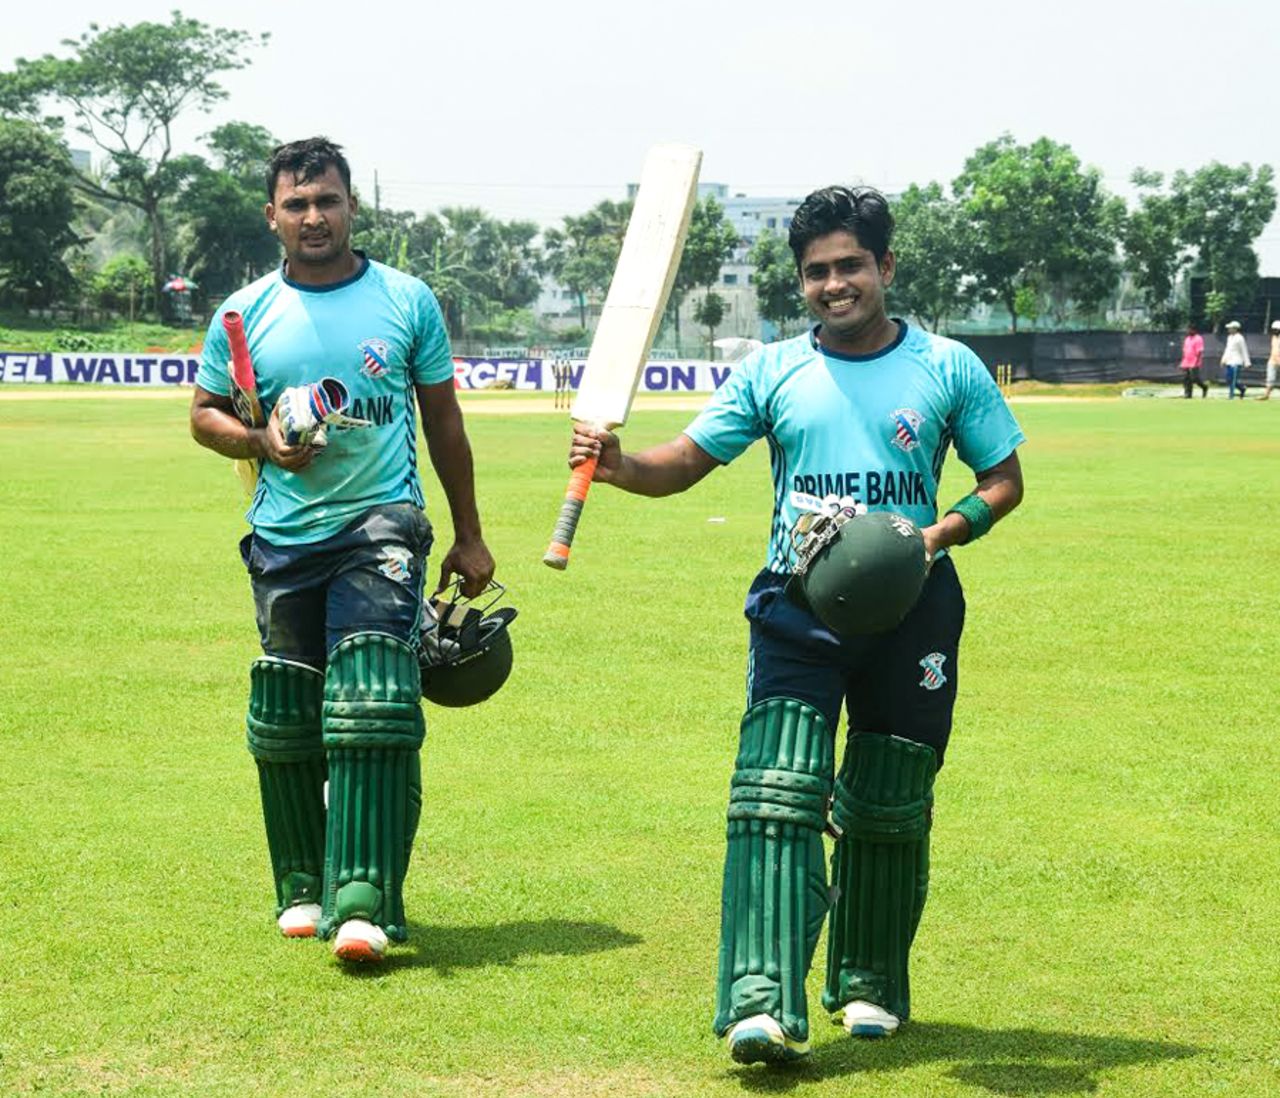 Al-Amin notched up his highest List-A score of 106, Prime Bank Cricket Club v Khelaghar Samaj Kallyan Samity, Dhaka Premier League 2017, Savar, April 18, 2017